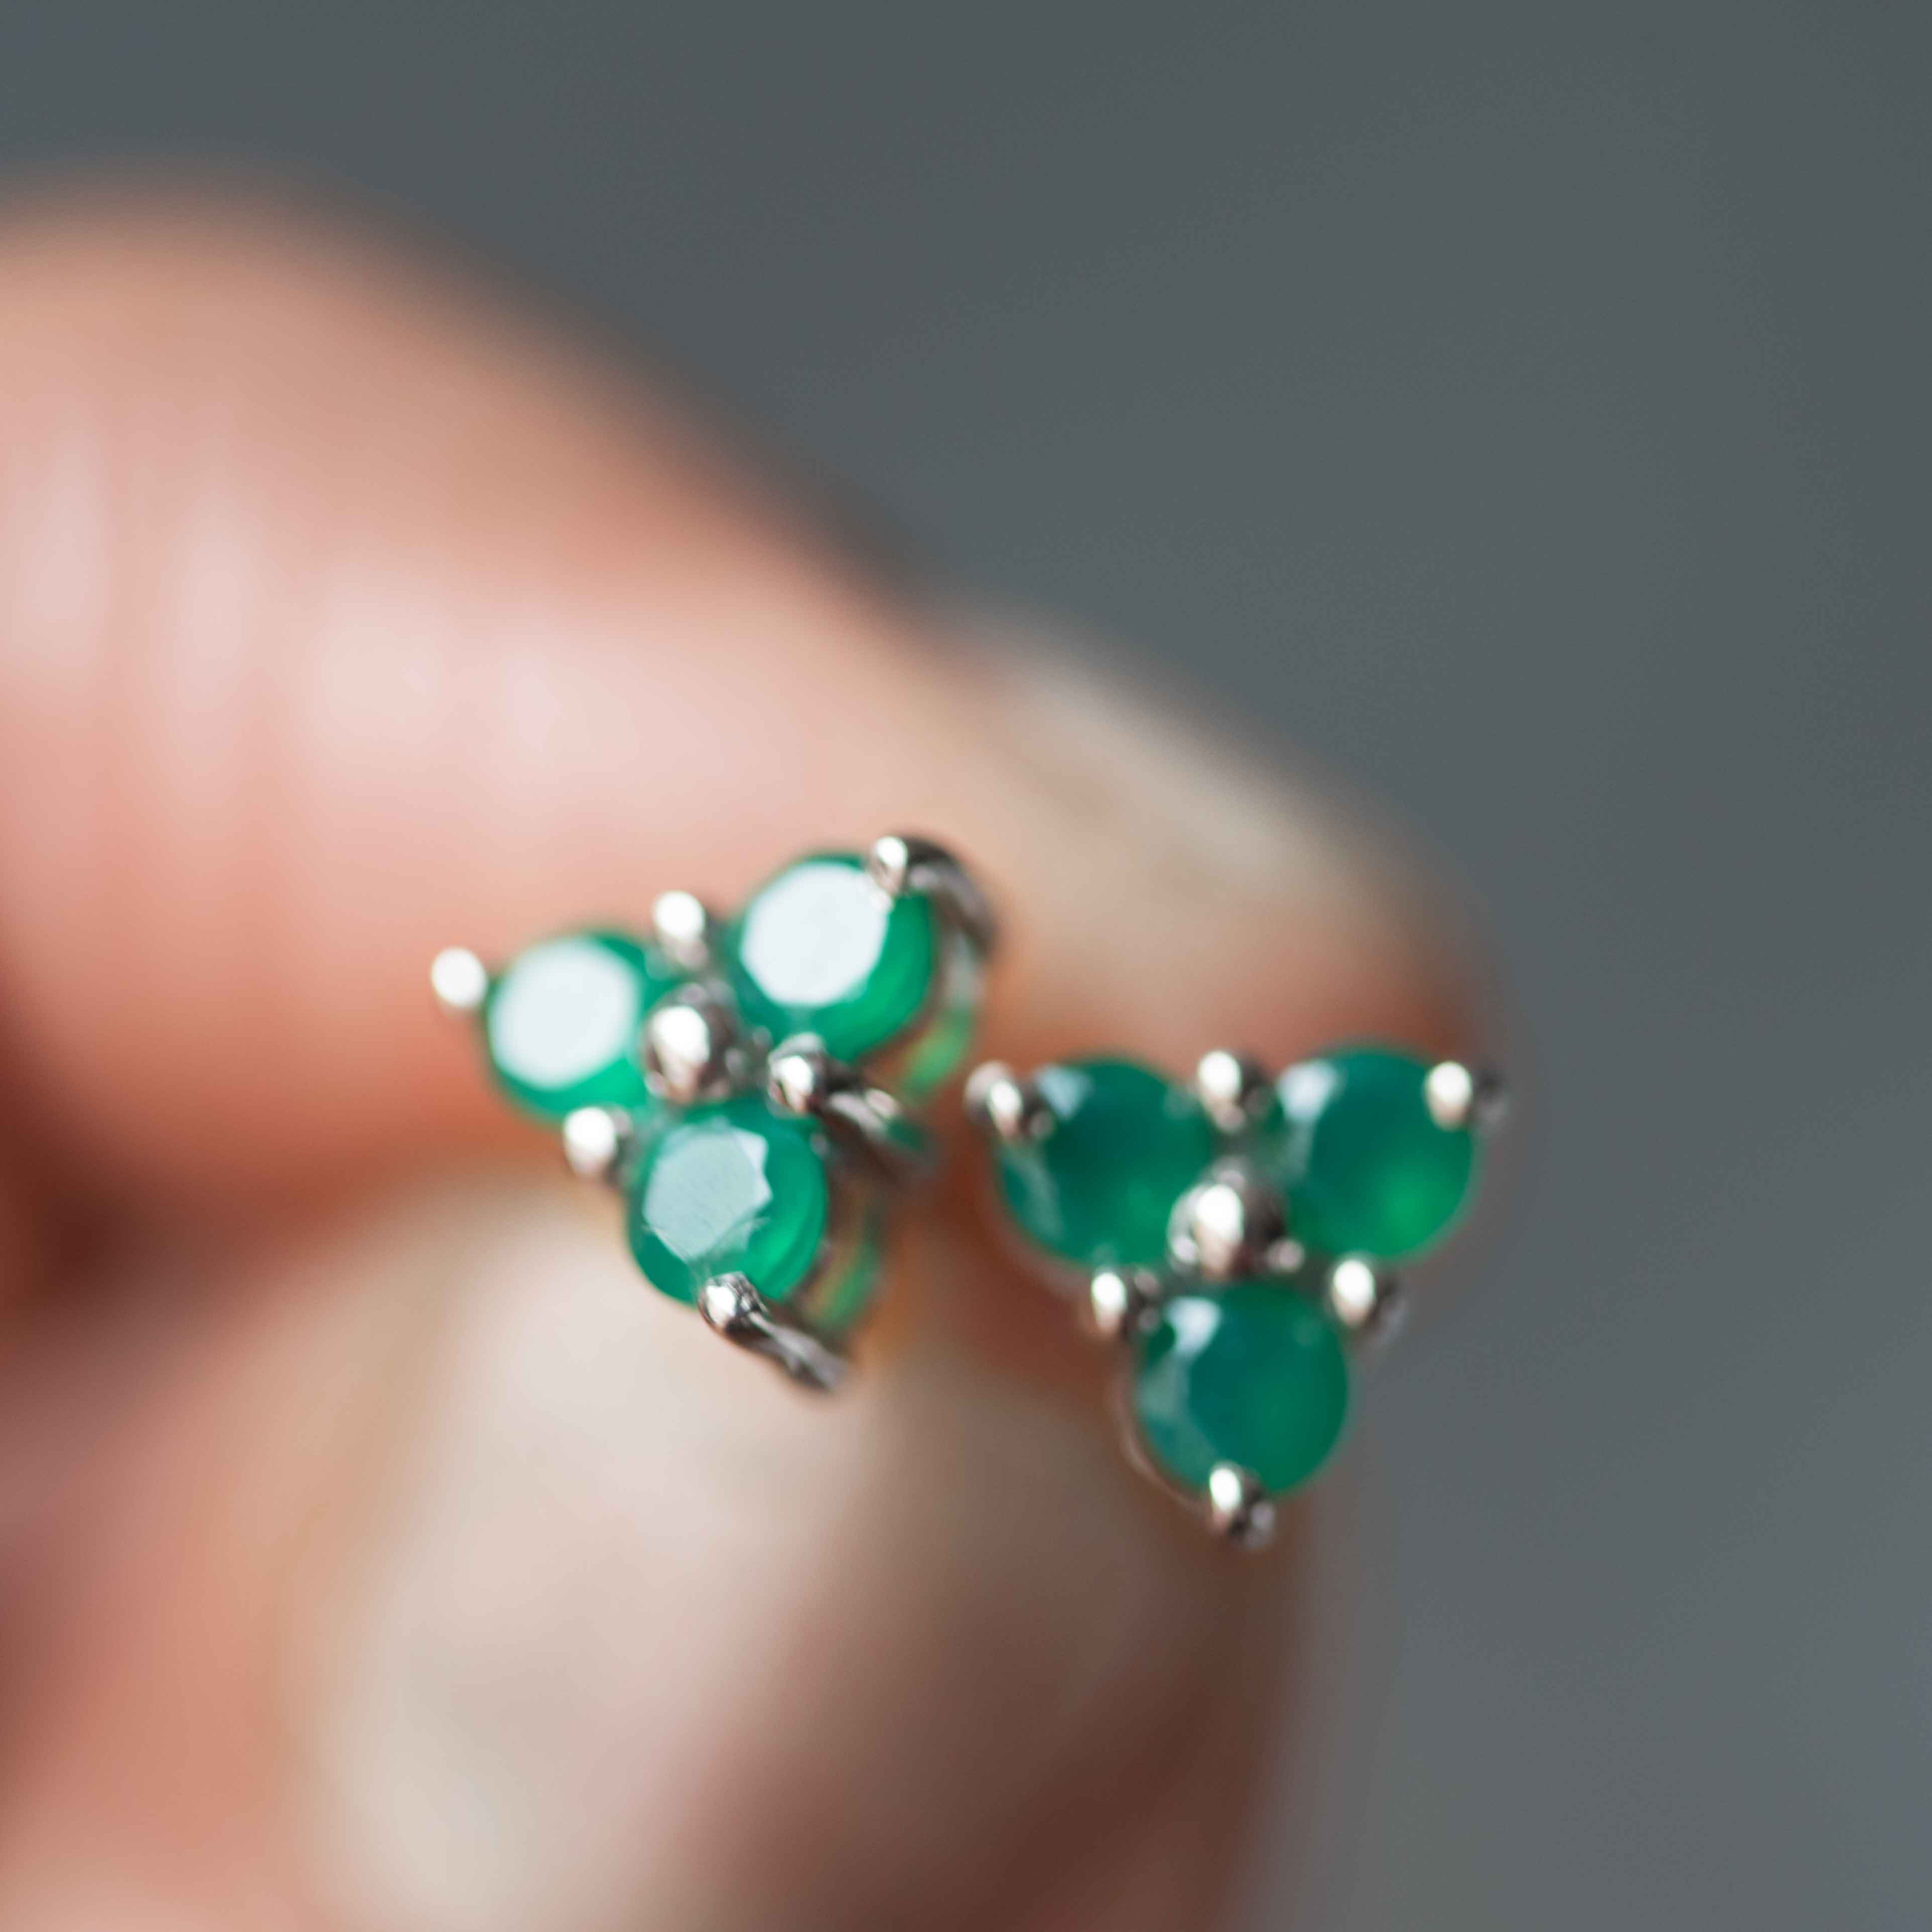 green onyx earrings silver genuine gemstone emerald color birthstone studs